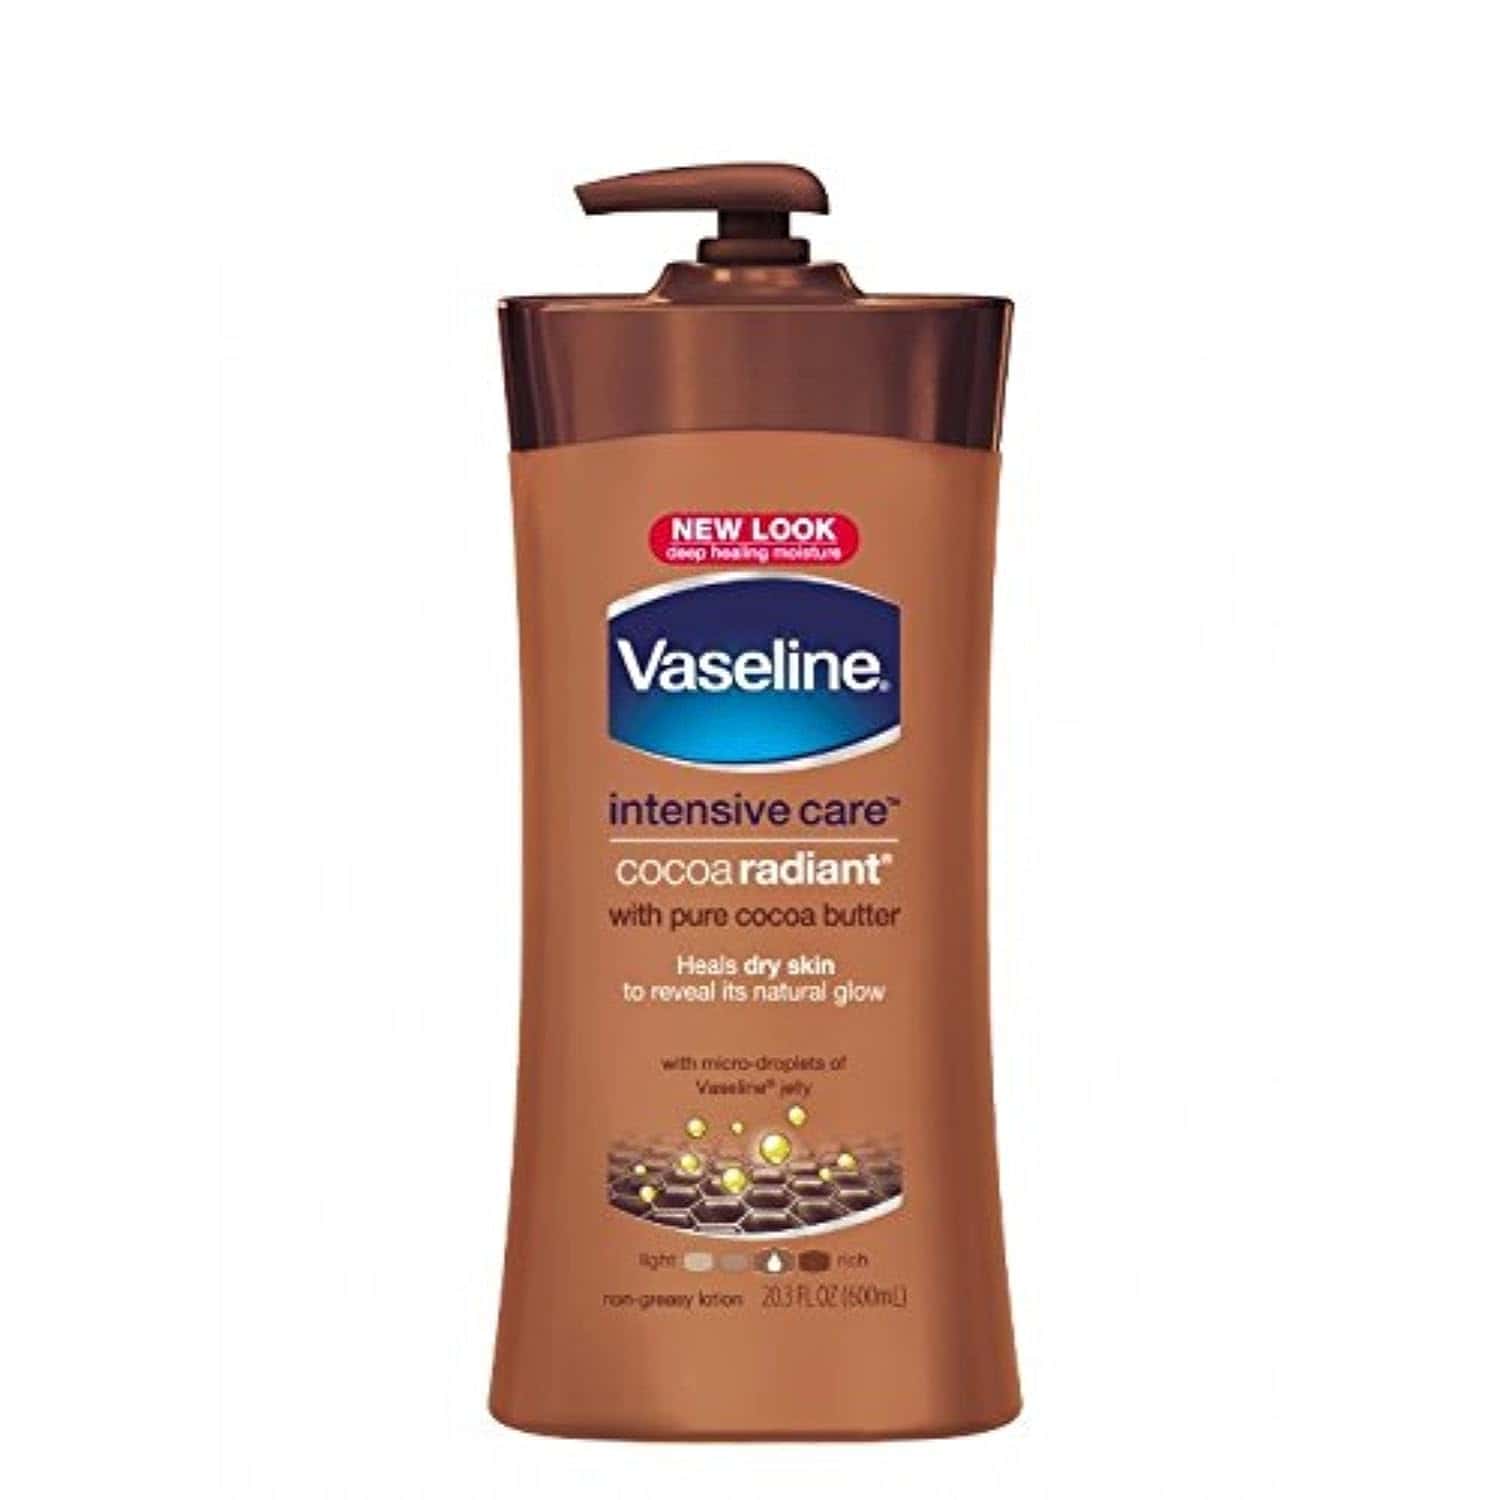 Vaseline Intensive Care Body Lotion for Dry Skin